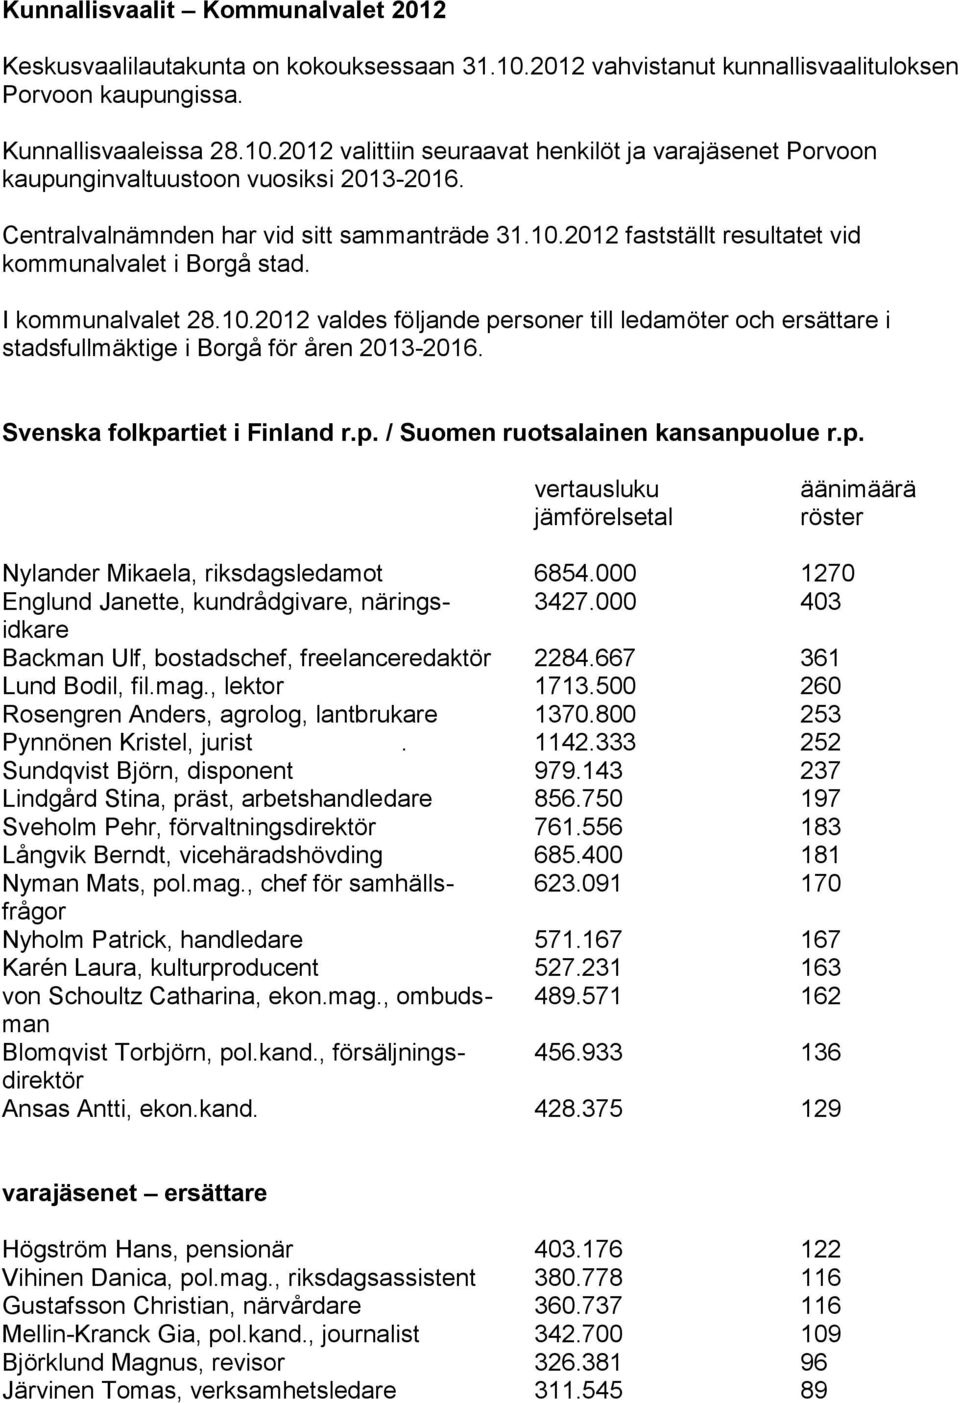 Svenska folkpartiet i Finland r.p. / Suomen ruotsalainen kansanpuolue r.p. Nylander Mikaela, riksdagsledamot 6854.000 1270 Englund Janette, kundrådgivare, närings- 3427.